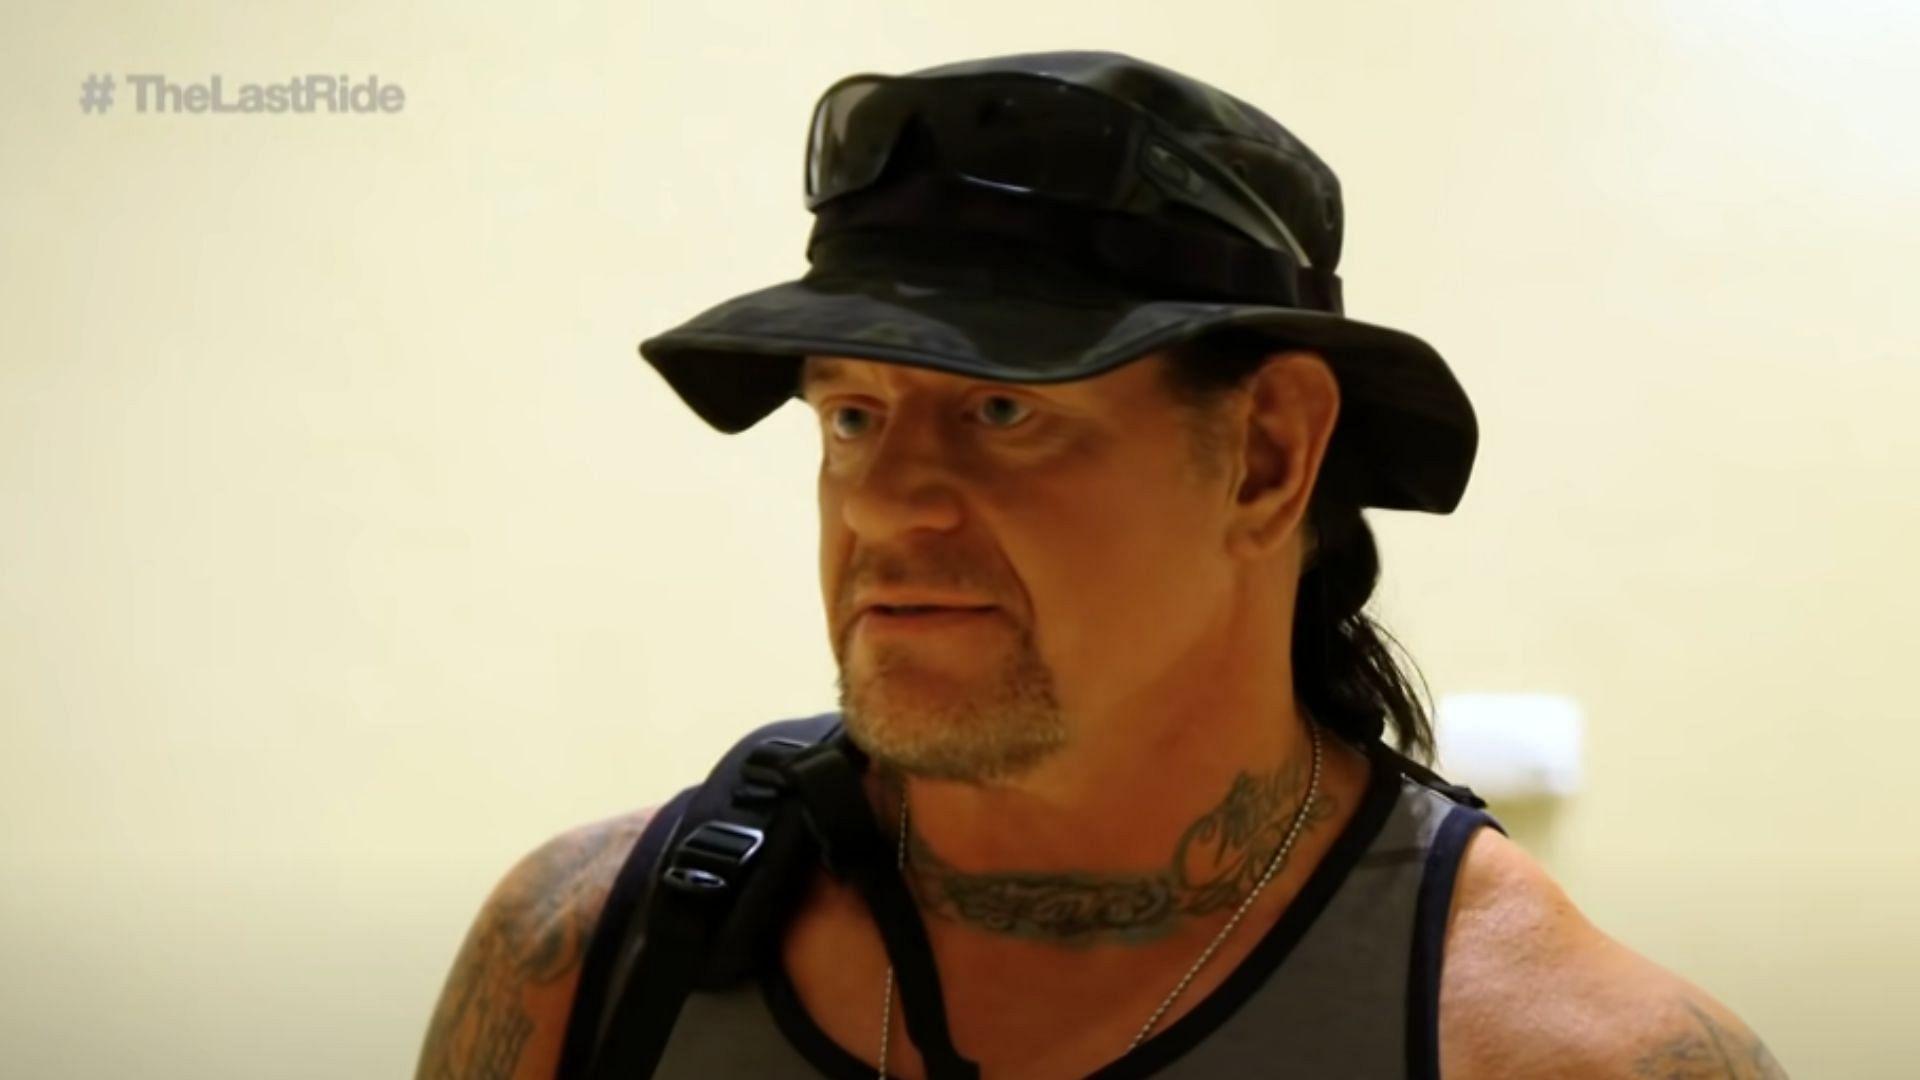 The Undertaker, real name Mark Calaway